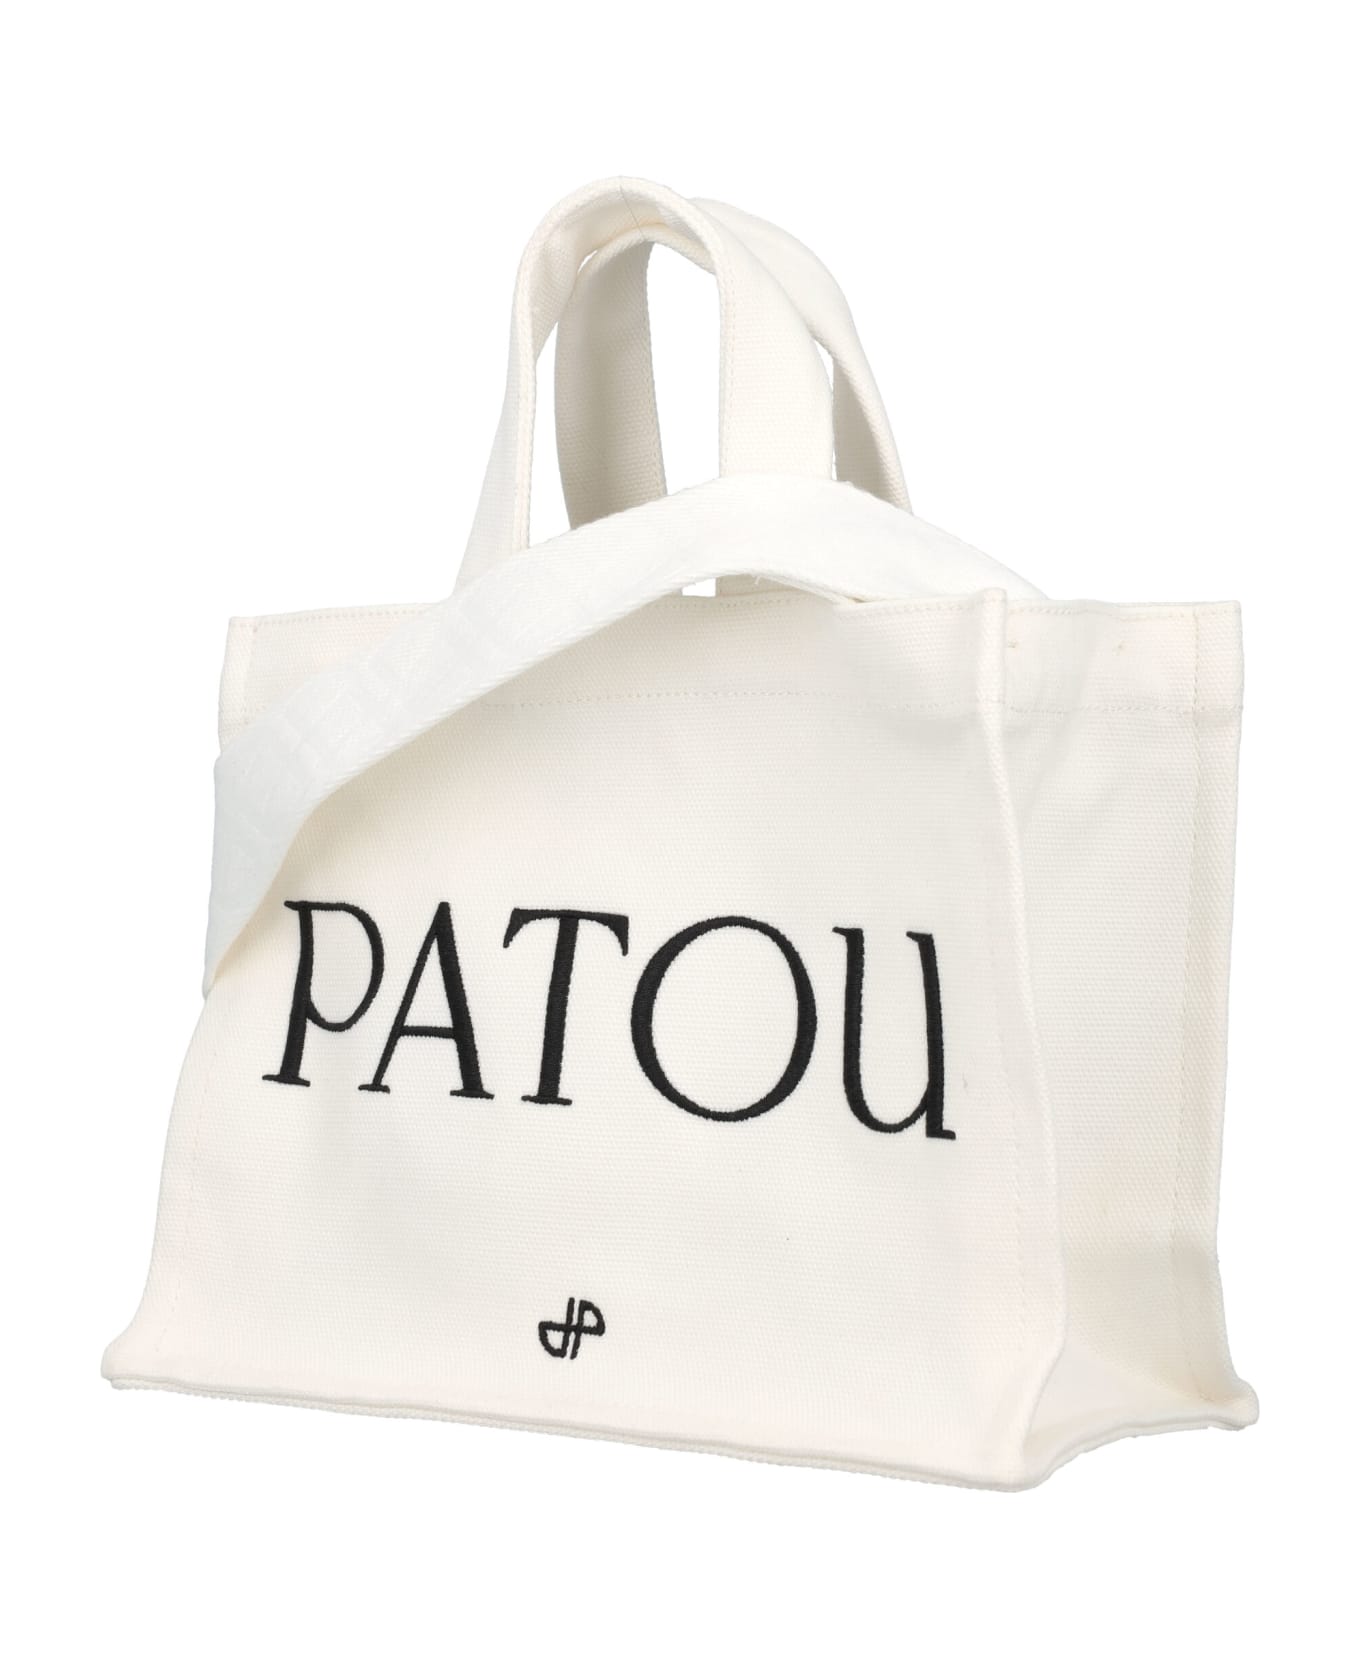 Patou Small Tote Bag - W White